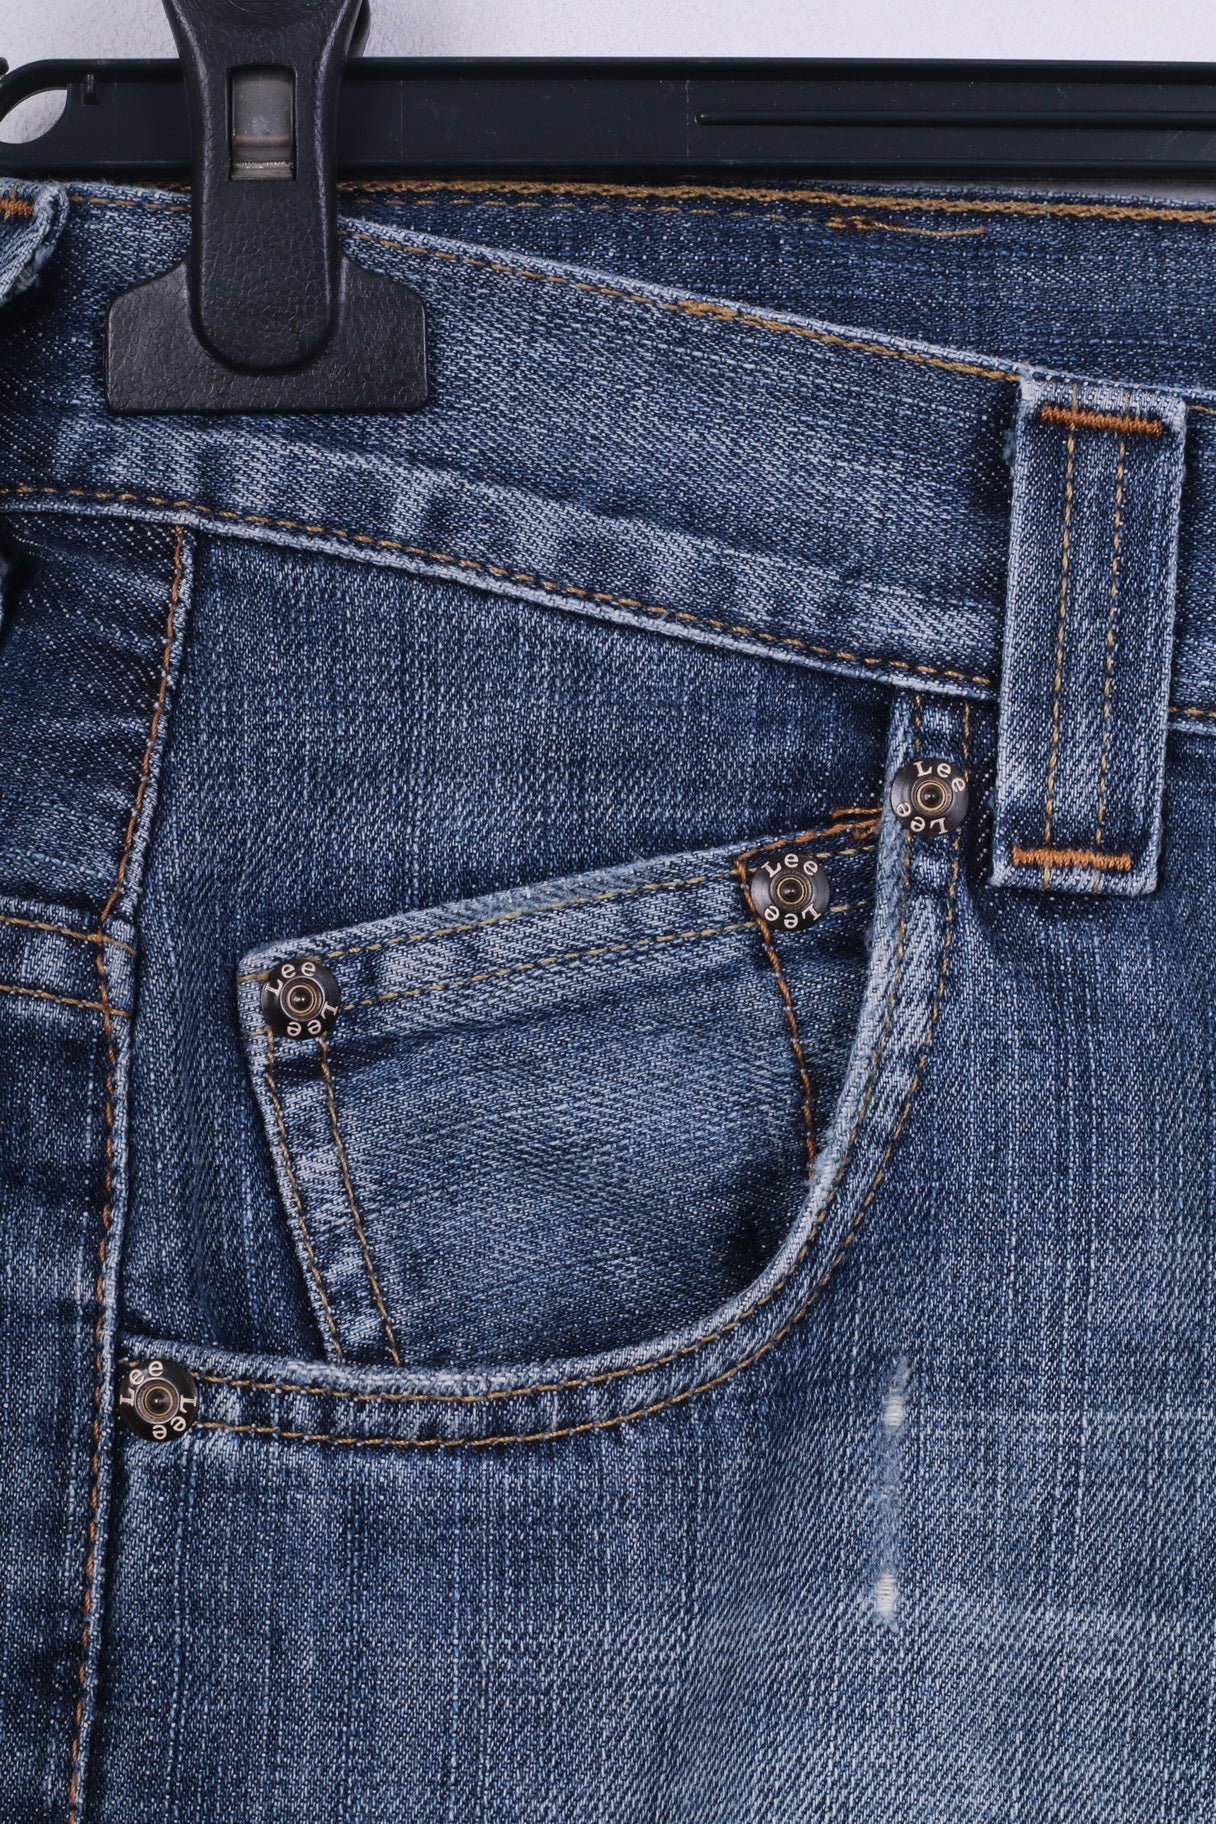 Lee Pantalon Garçon 14 Ans Denim Coton Jeans Bleu